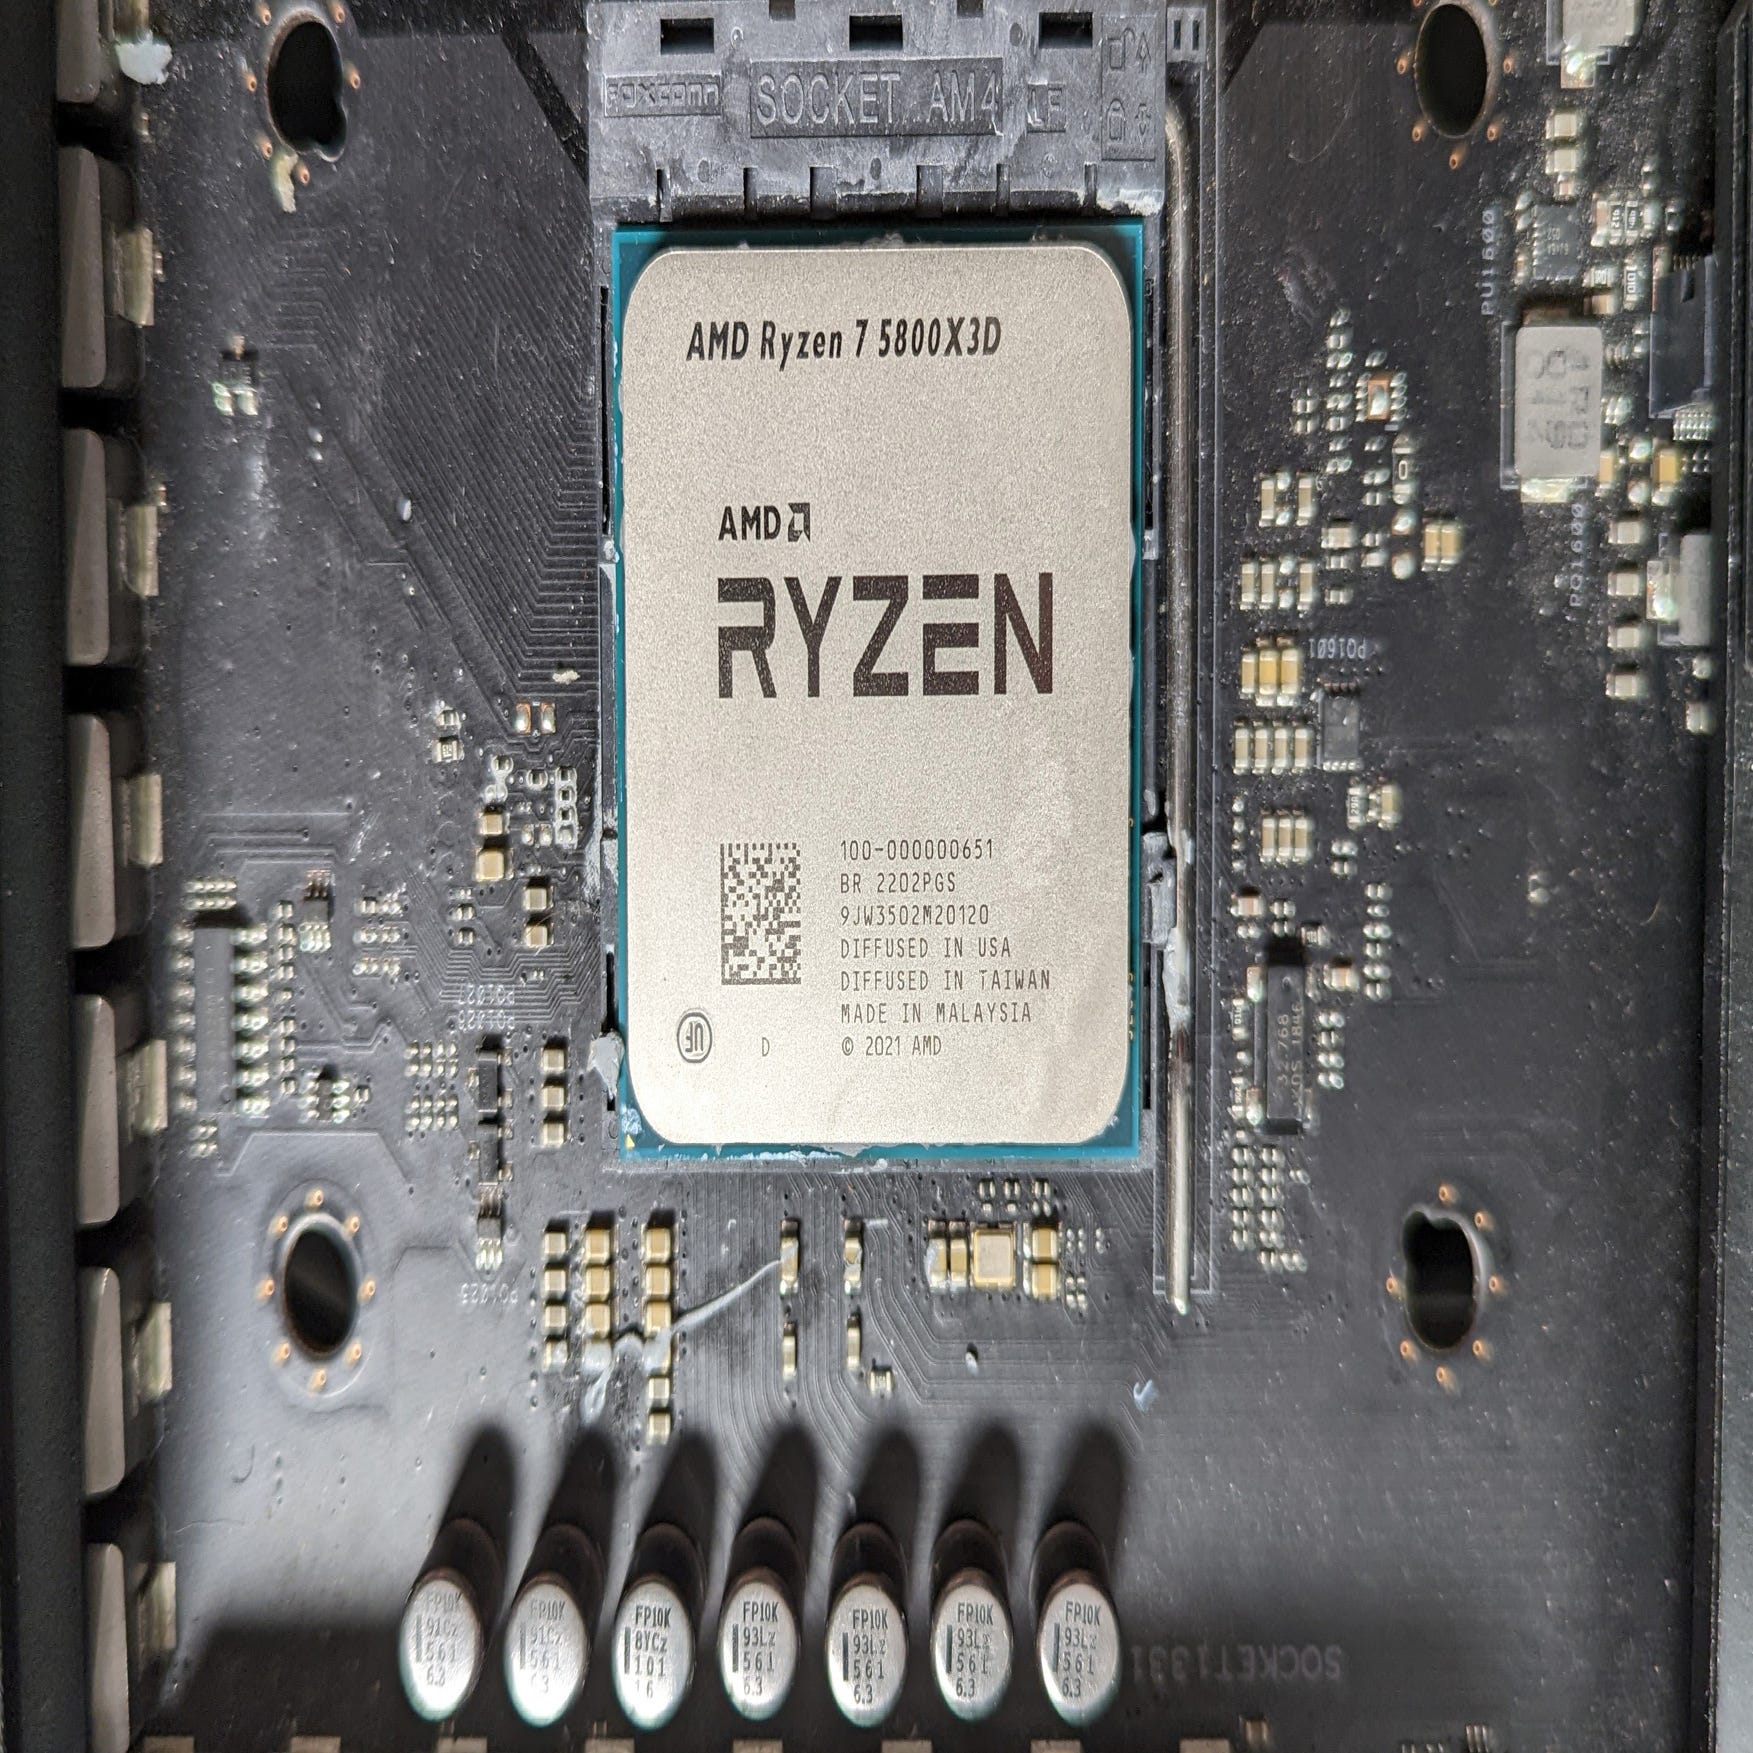 AMD Ryzen 7 5800X3D Review - The Magic of 3D V-Cache